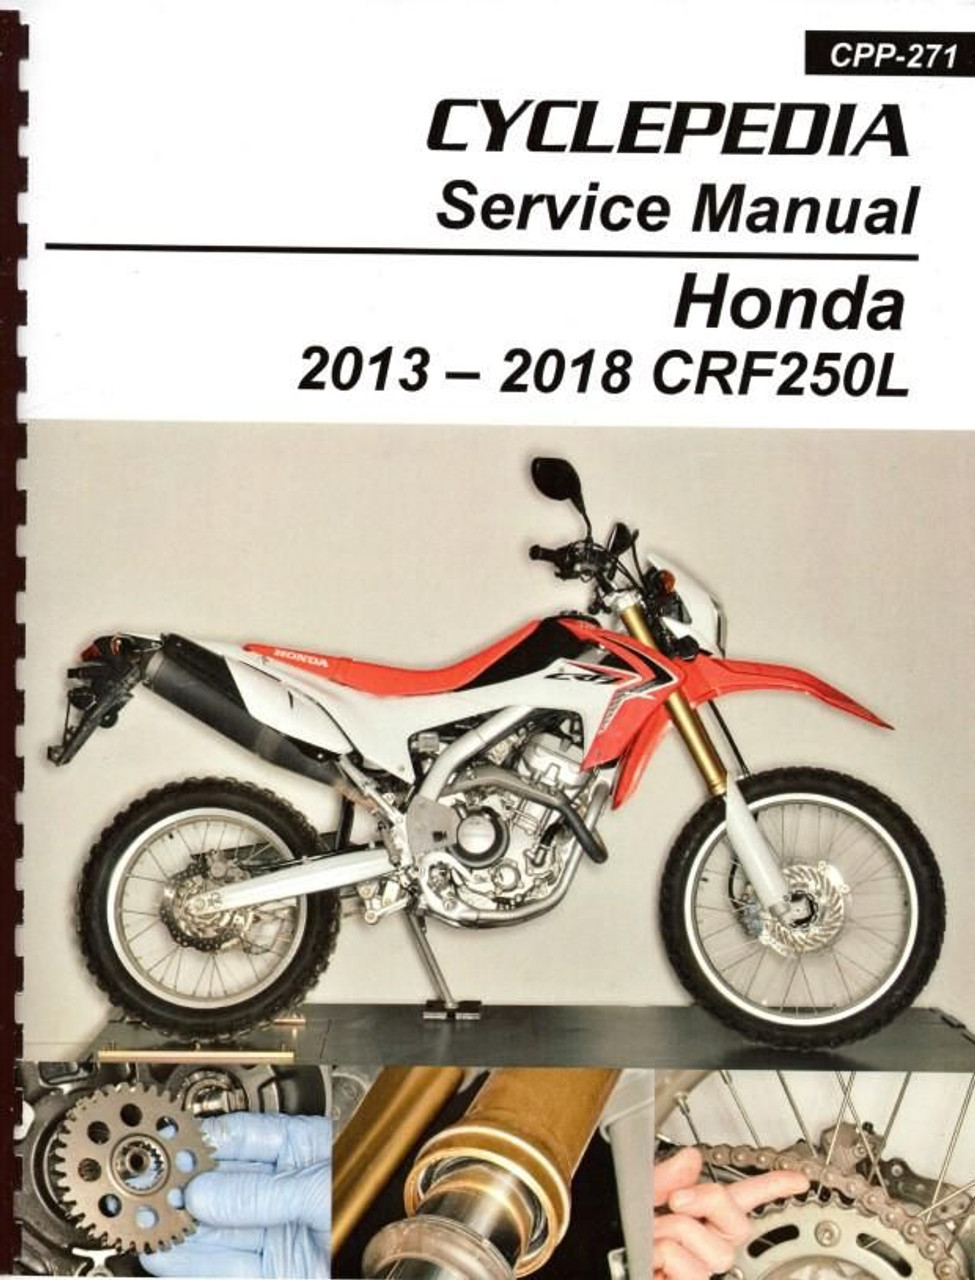 Honda CRF250L Service Manual: 2013-2018